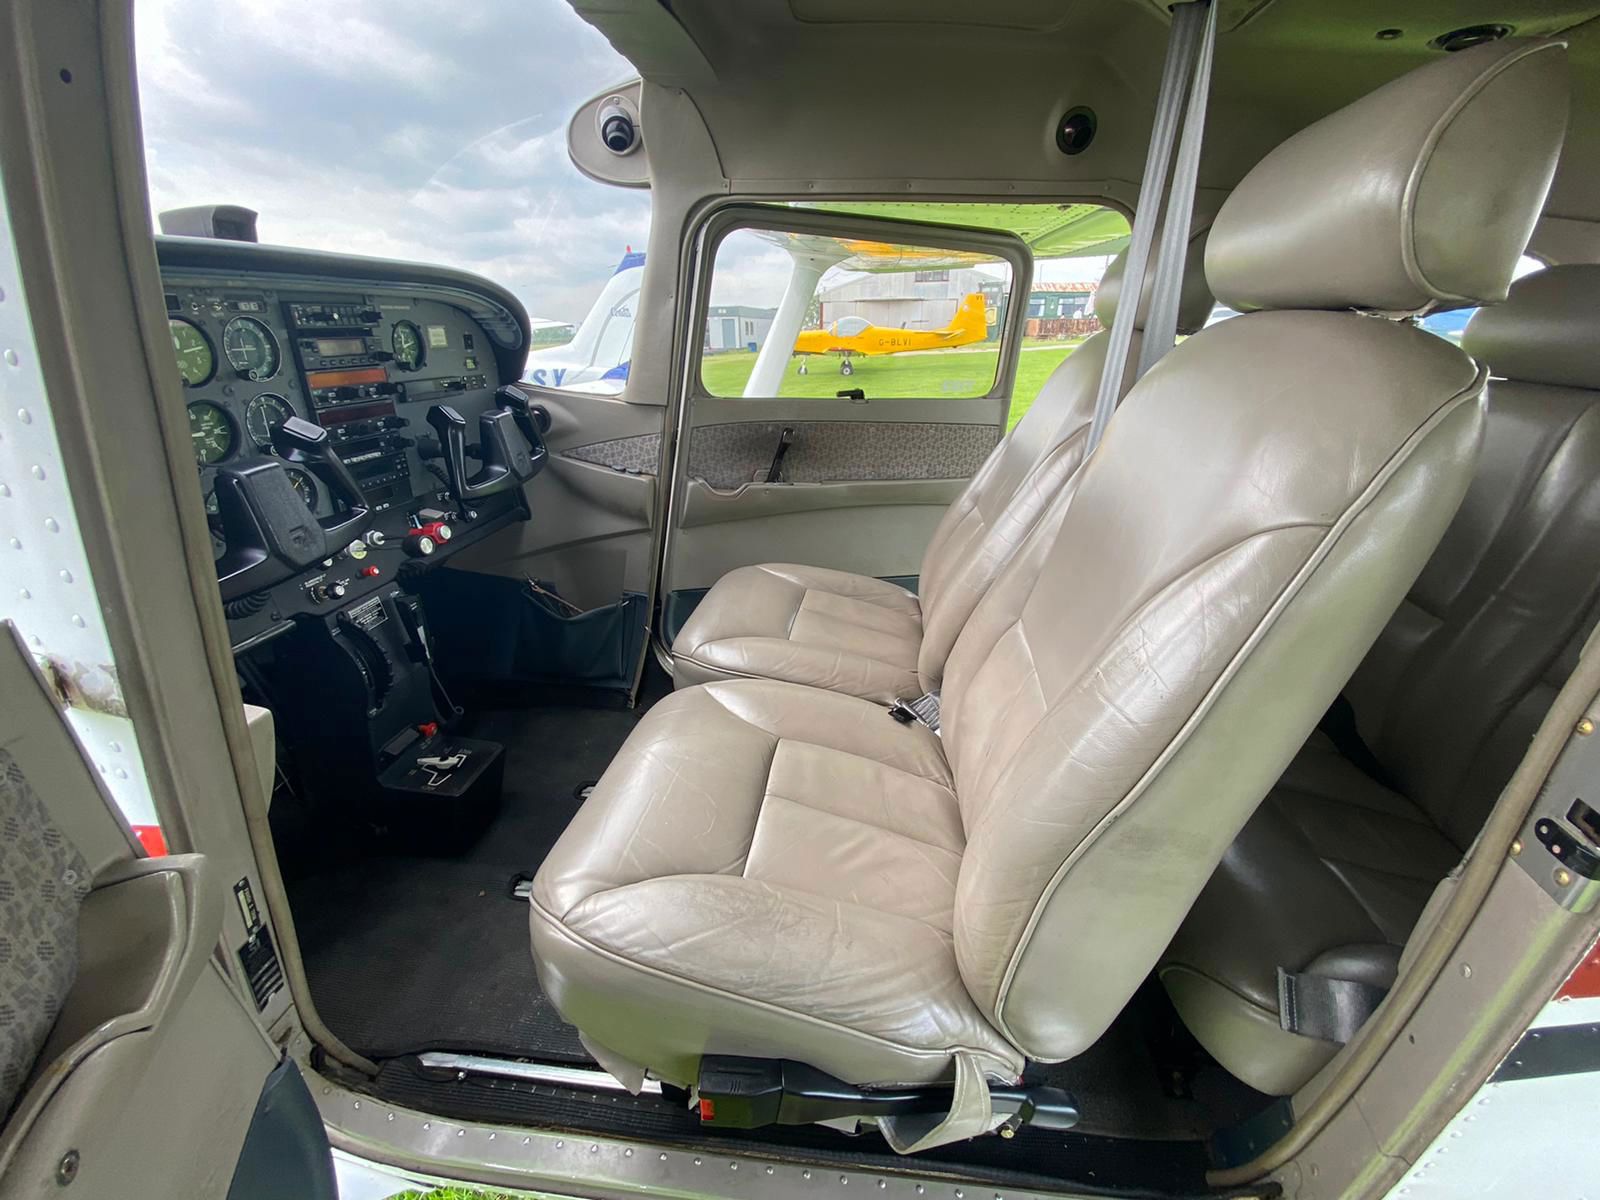 1999 Cessna 172S - Interior